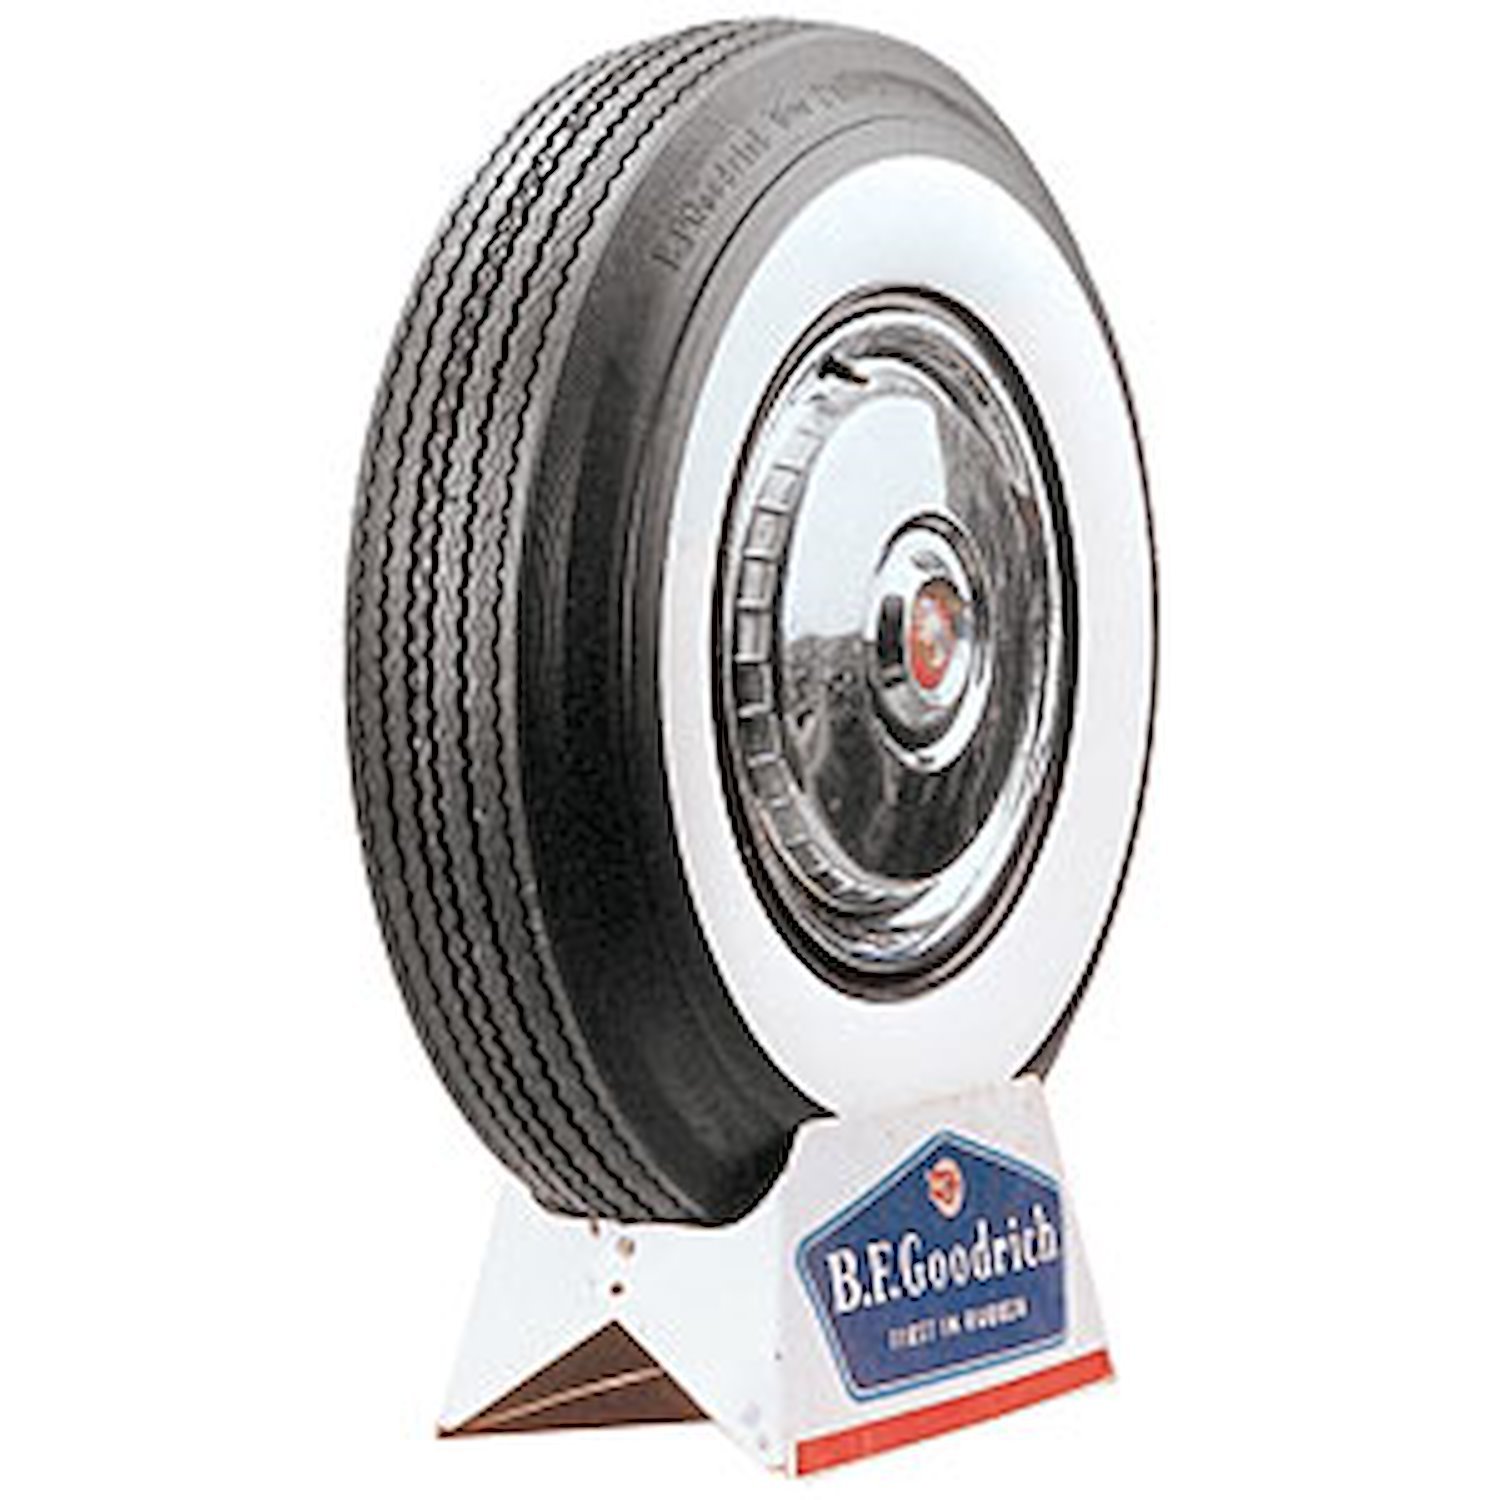 BFGoodrich Silvertown Whitewall Bias Ply Tire 500-15   ( 4.00" x 24.38" - 15" )